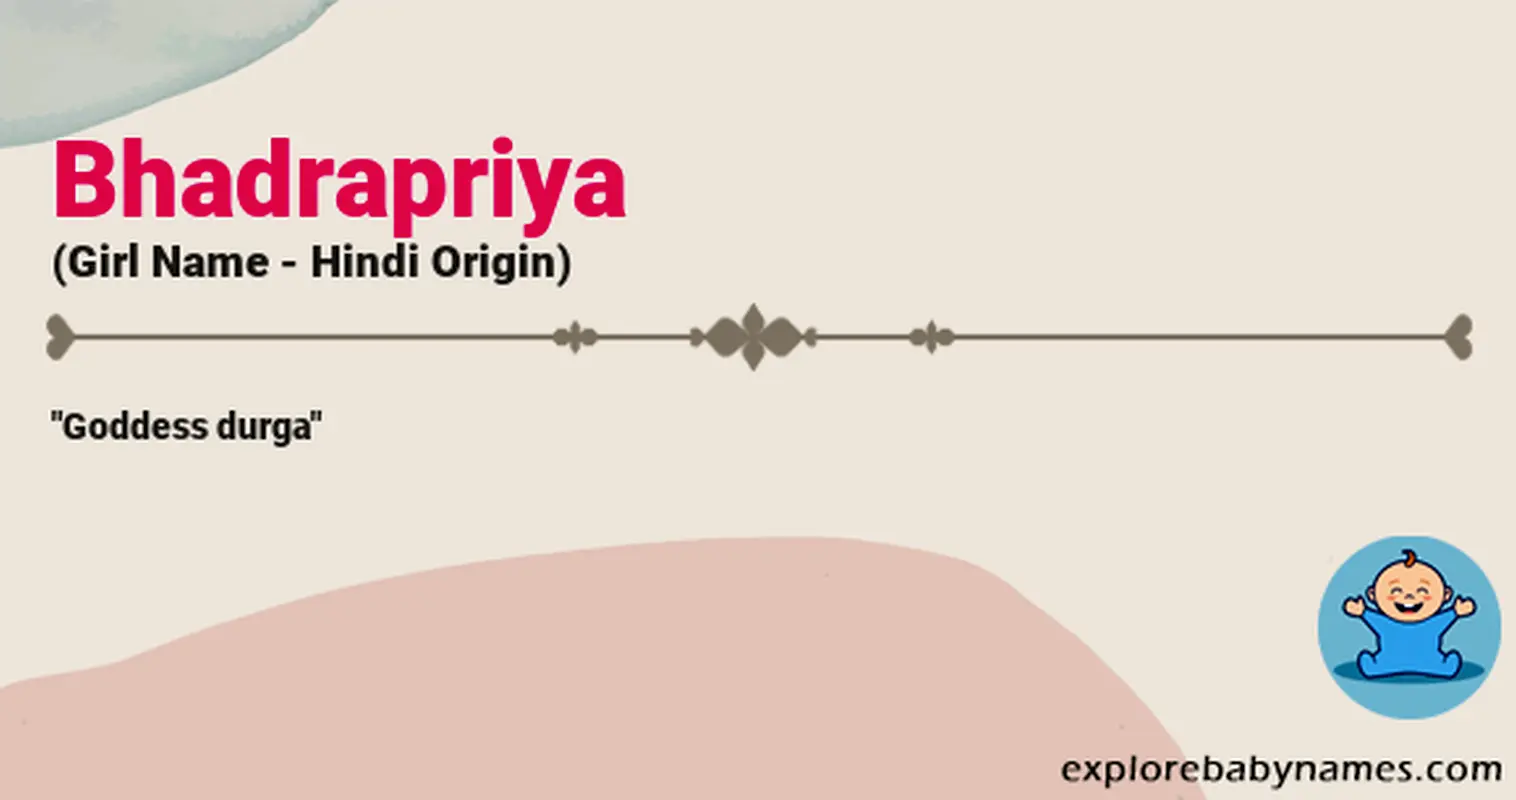 Meaning of Bhadrapriya